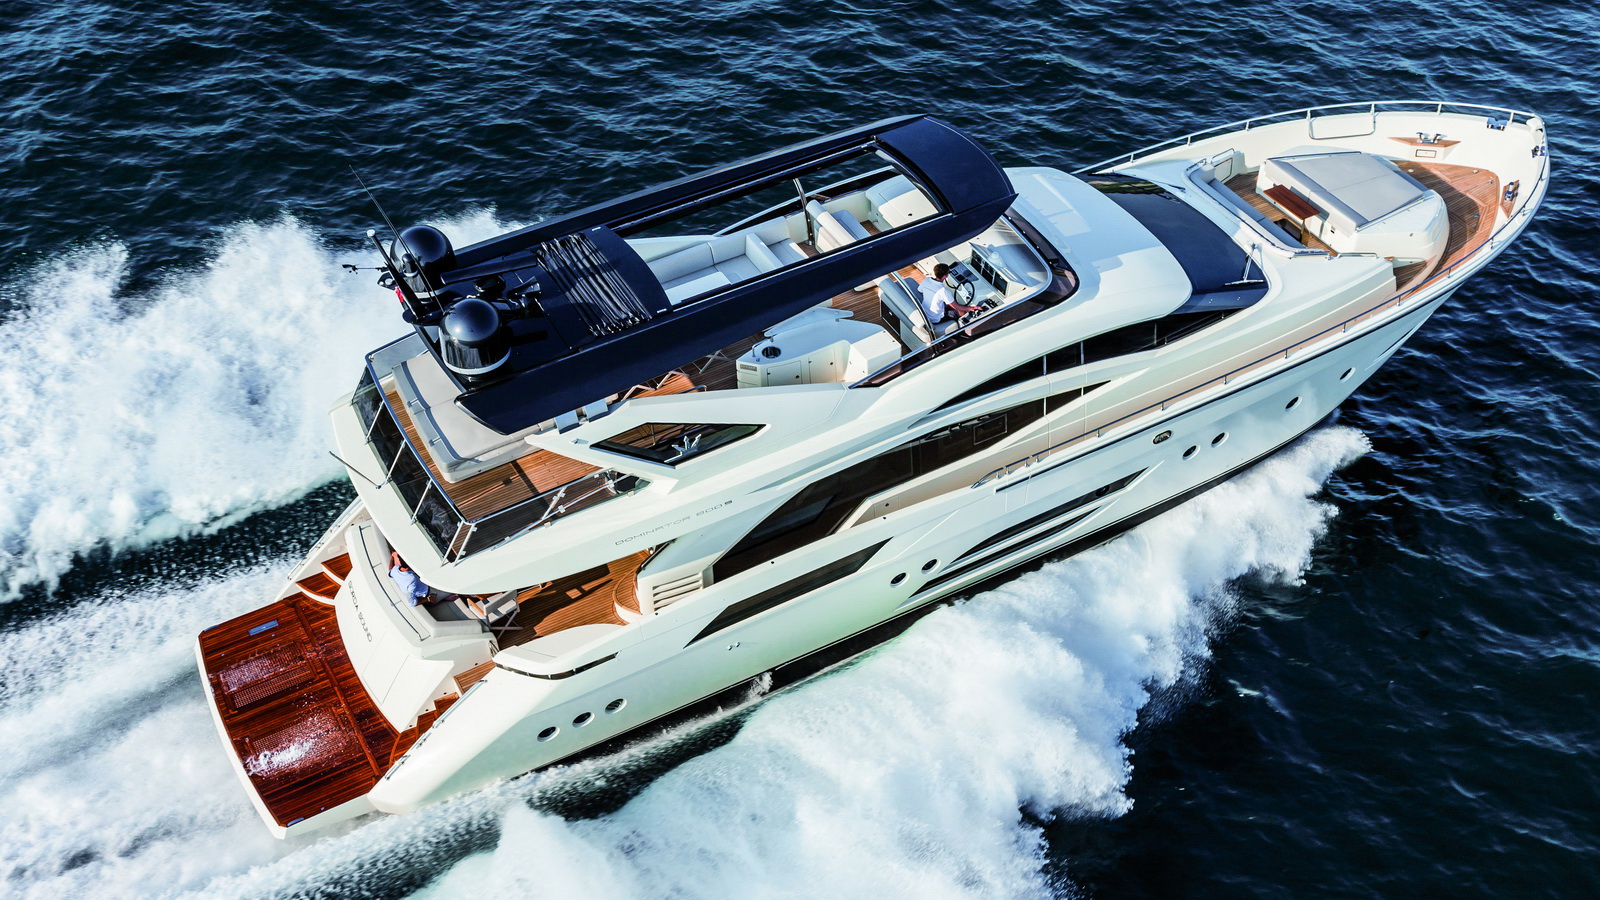 dominator 865 yacht price